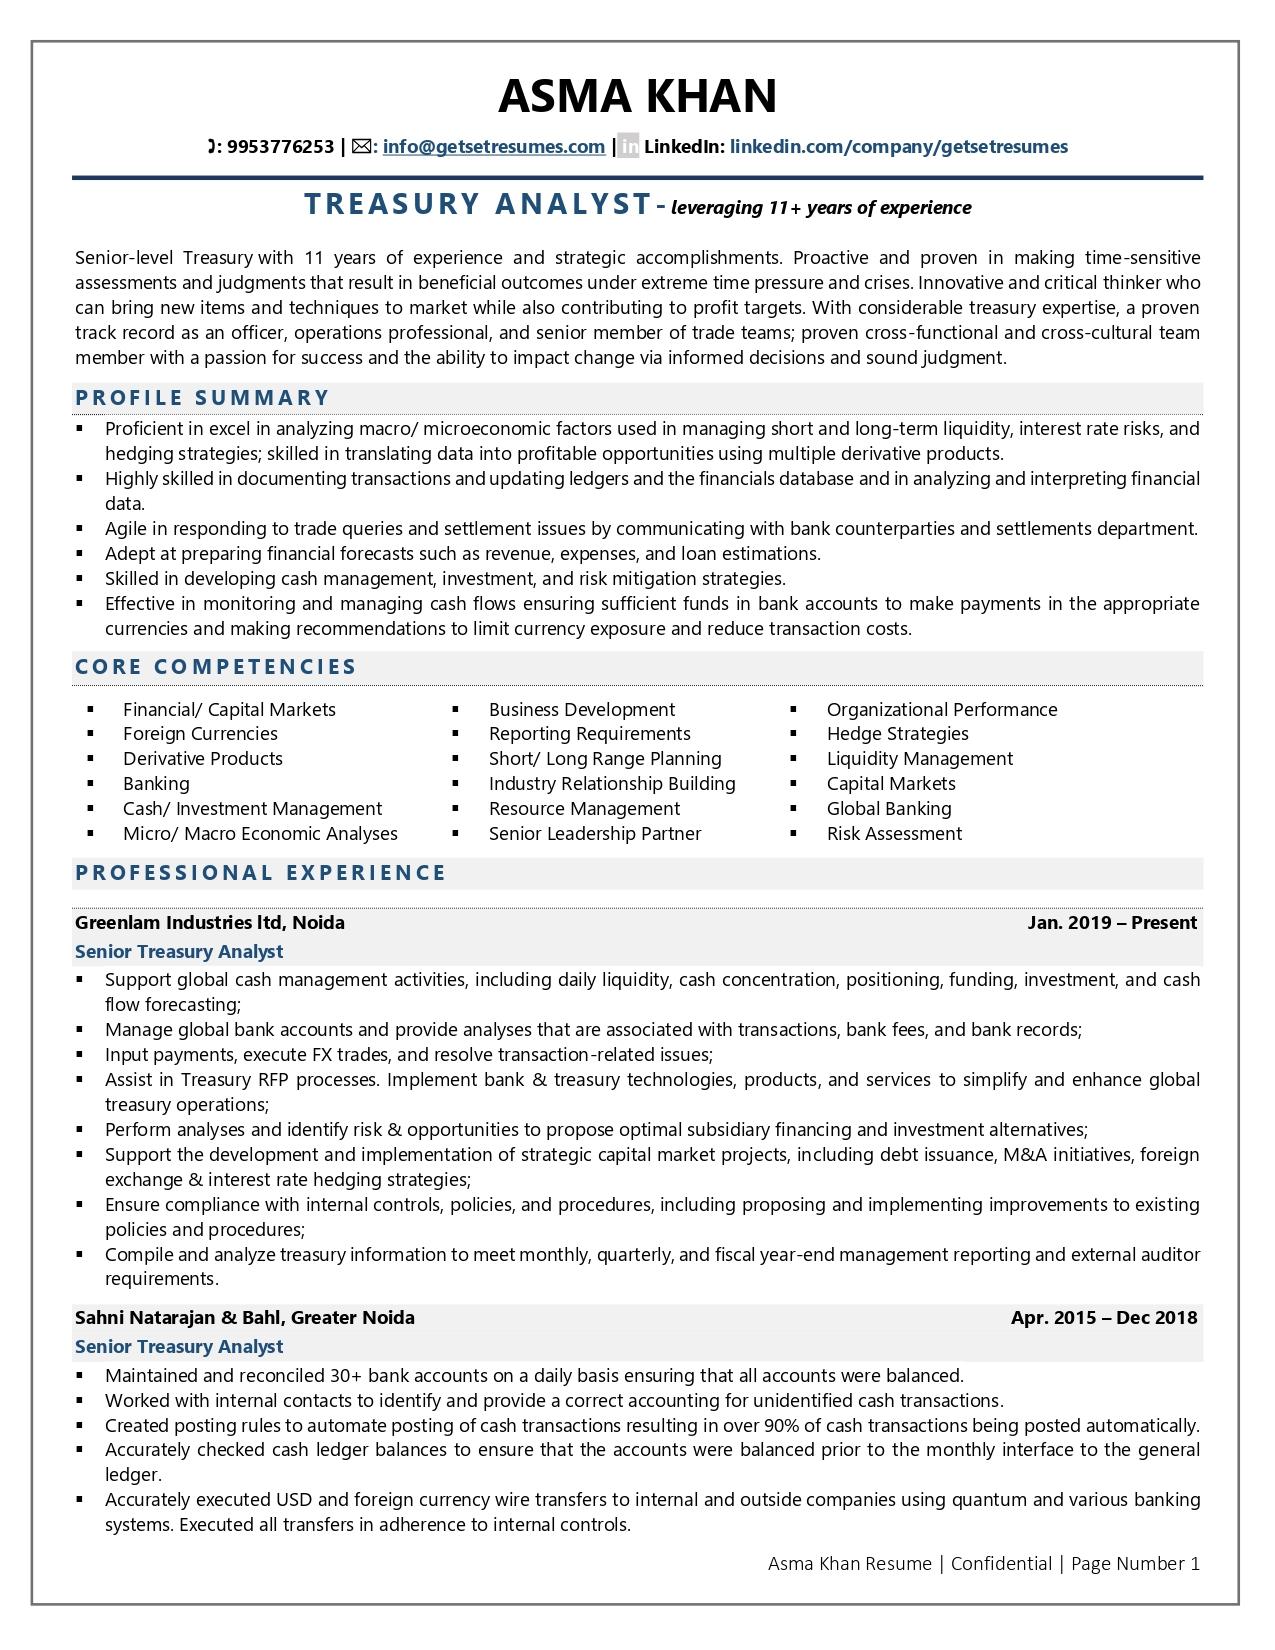 Treasury Analyst - Resume Example & Template